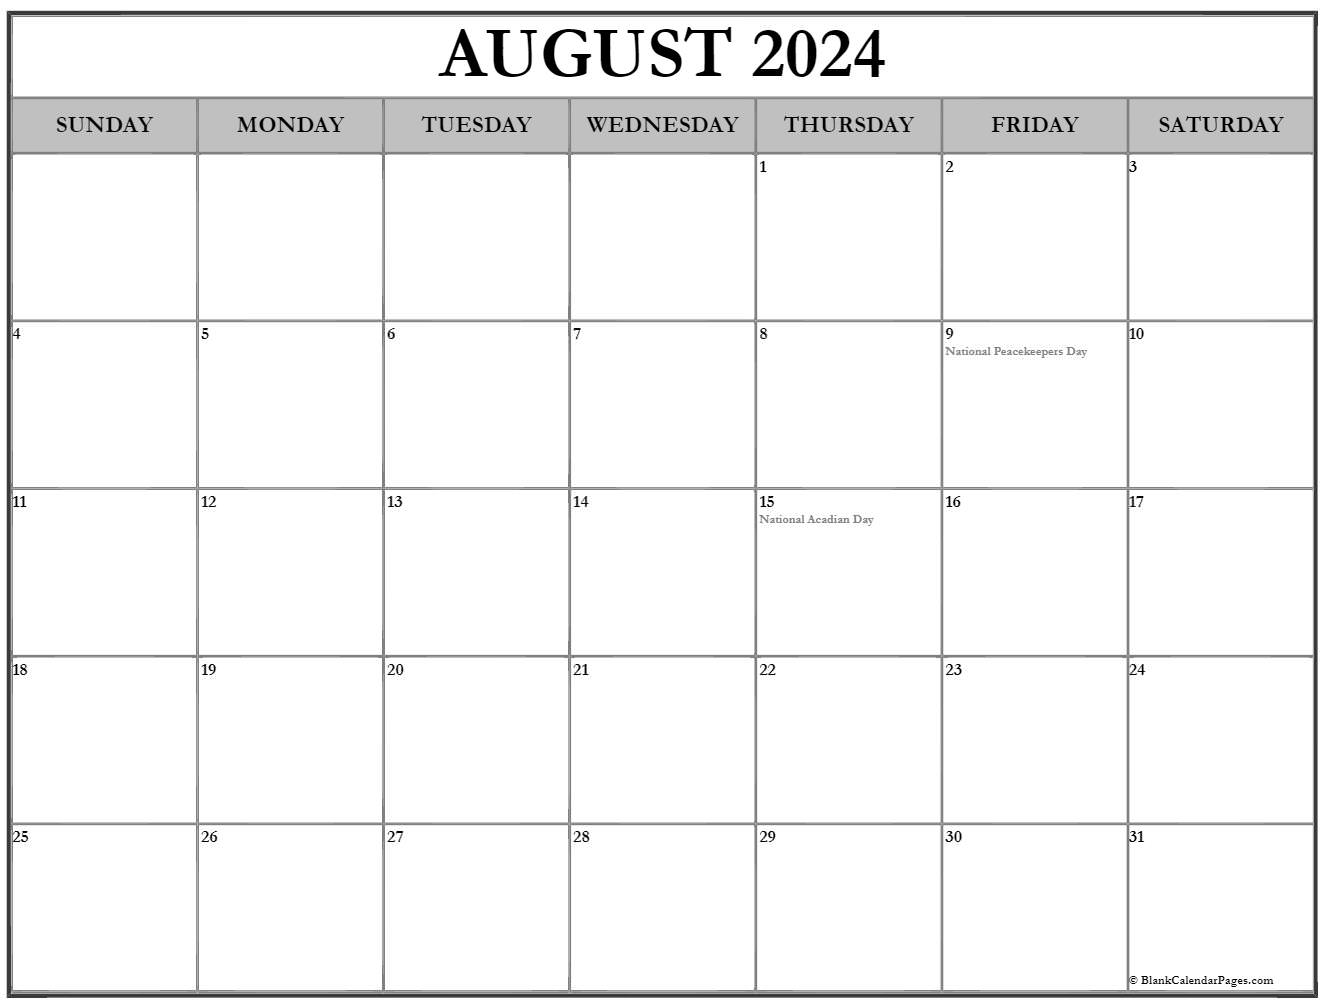 Personalized Calendar 2024 Canada Ontario 2024 Kaila Mariele